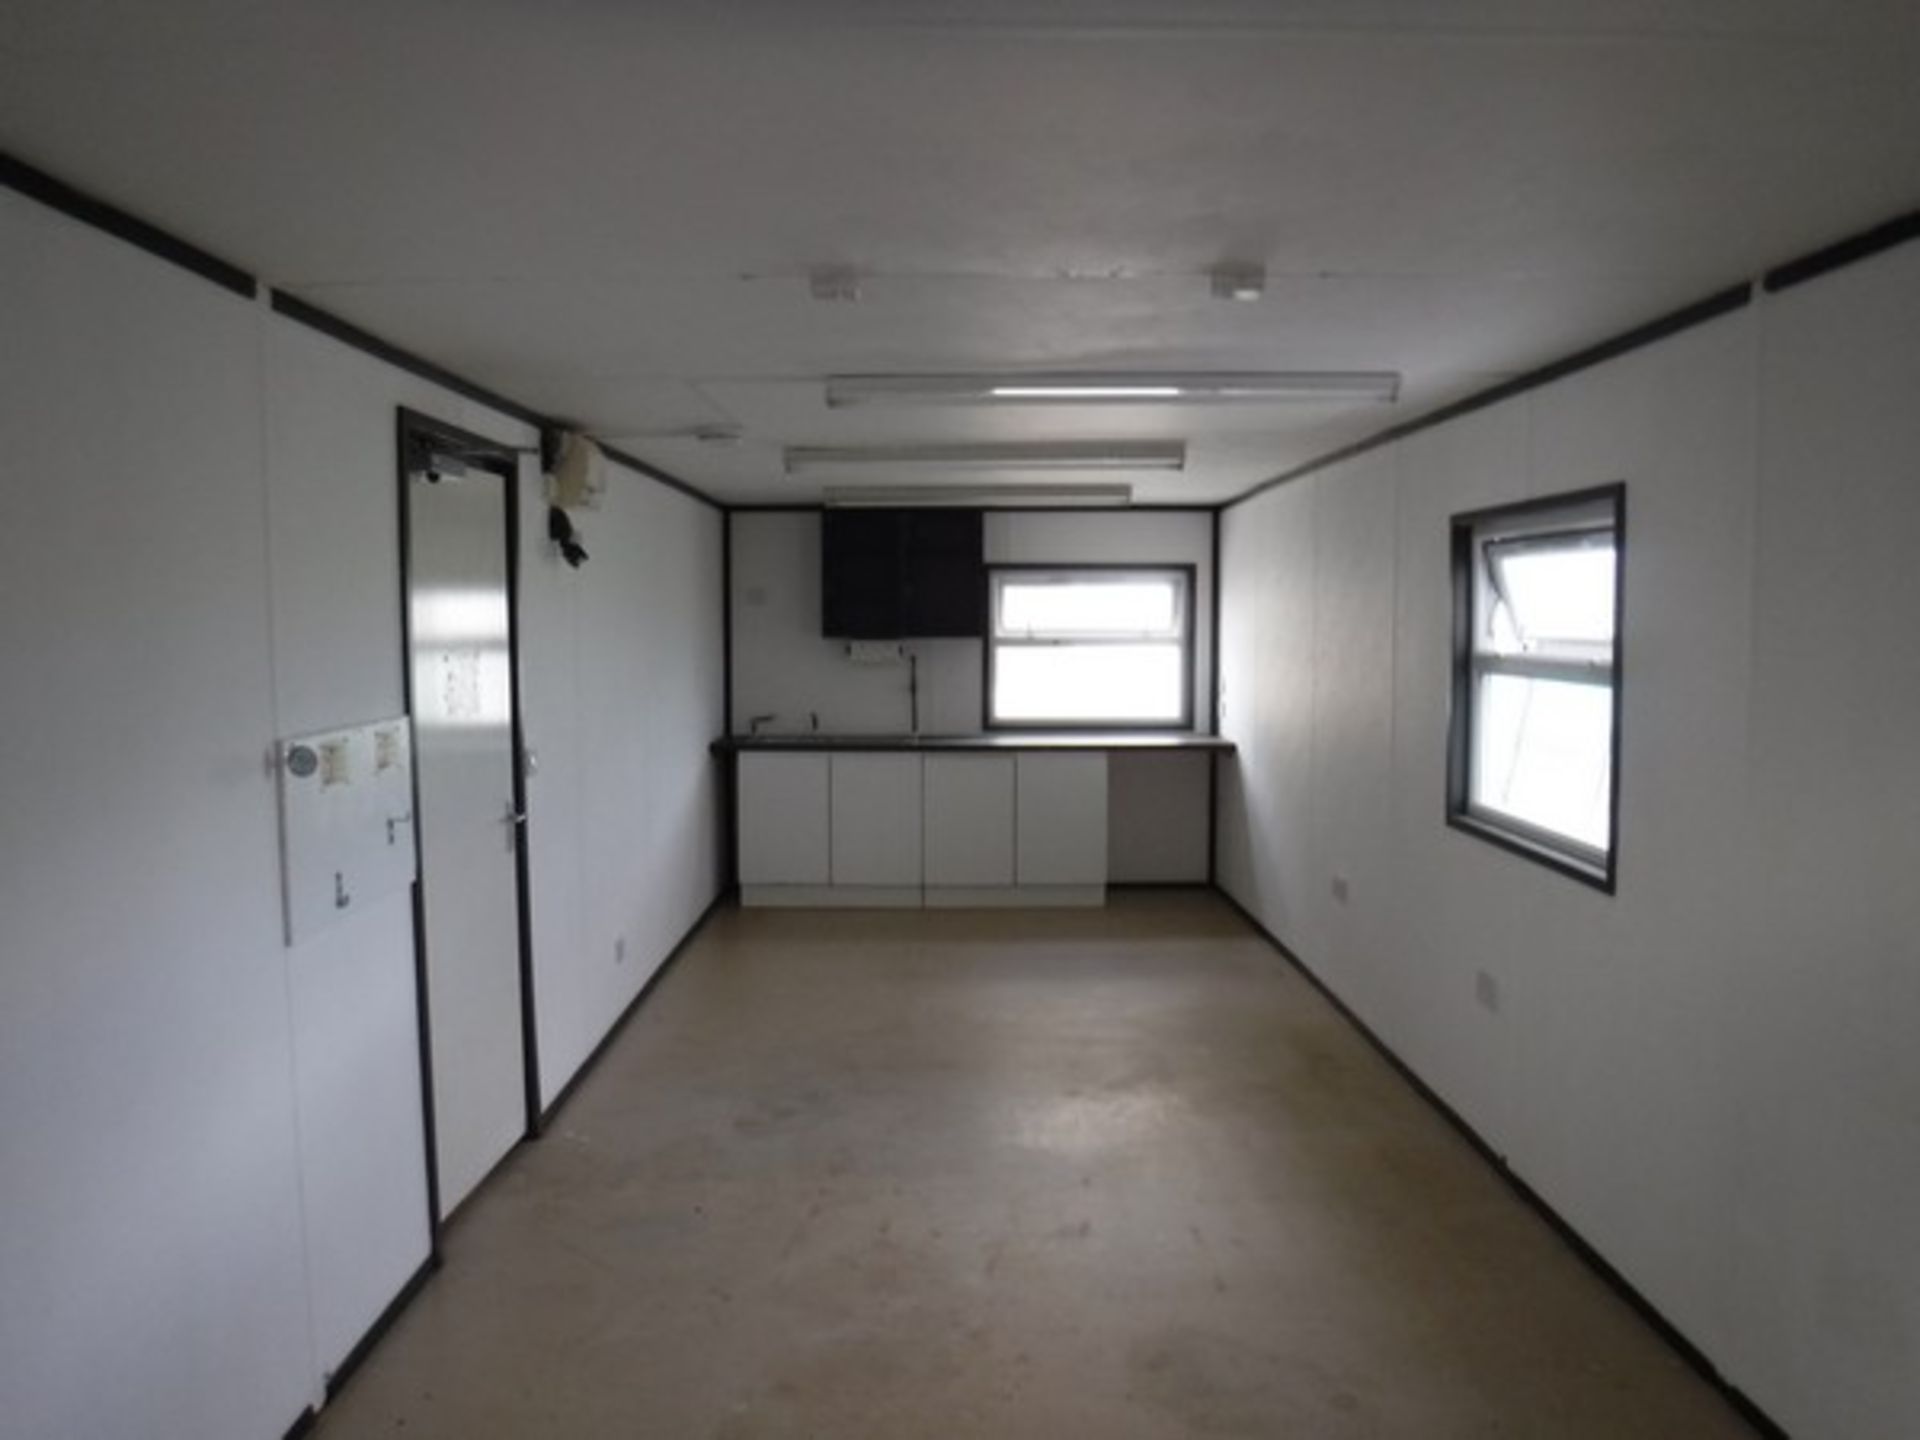 32' x 10' JACKLEG canteen cabin. Keys in office - Bild 5 aus 7